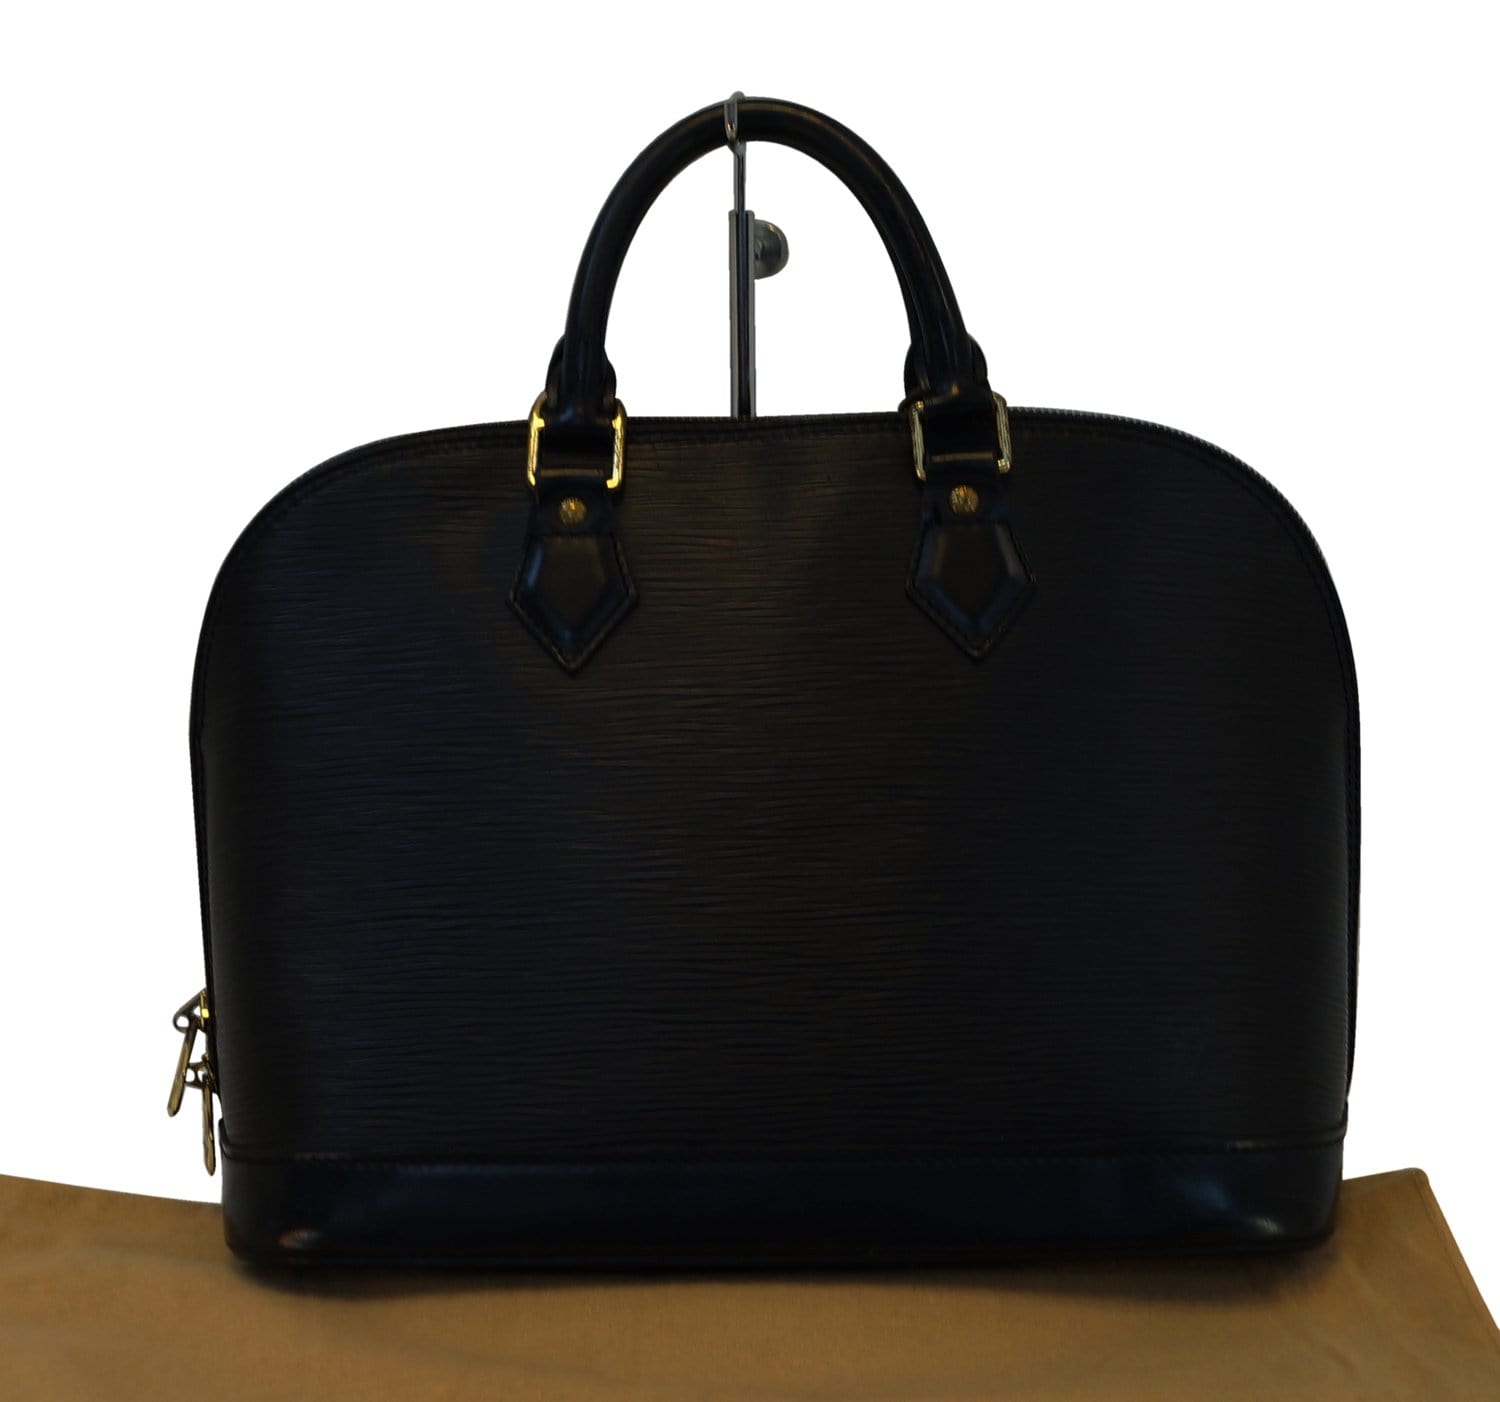 LOUIS VUITTON Epi Leather Alma PM Black Satchel Handbag